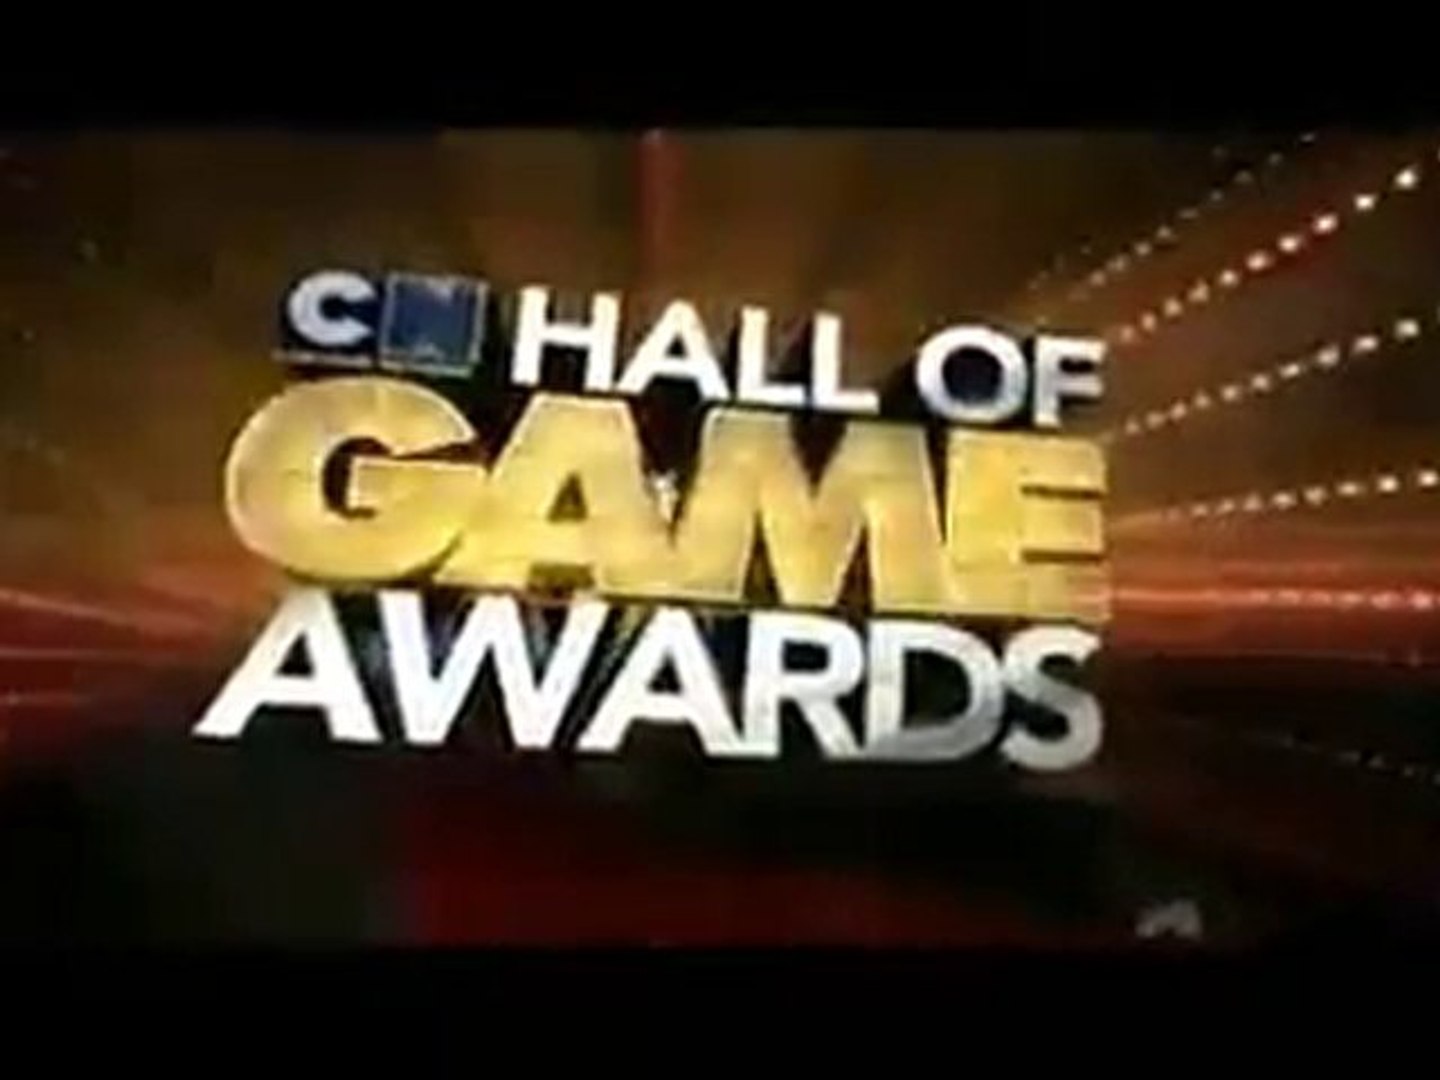 Hall of Game Awards, Cartoon Network